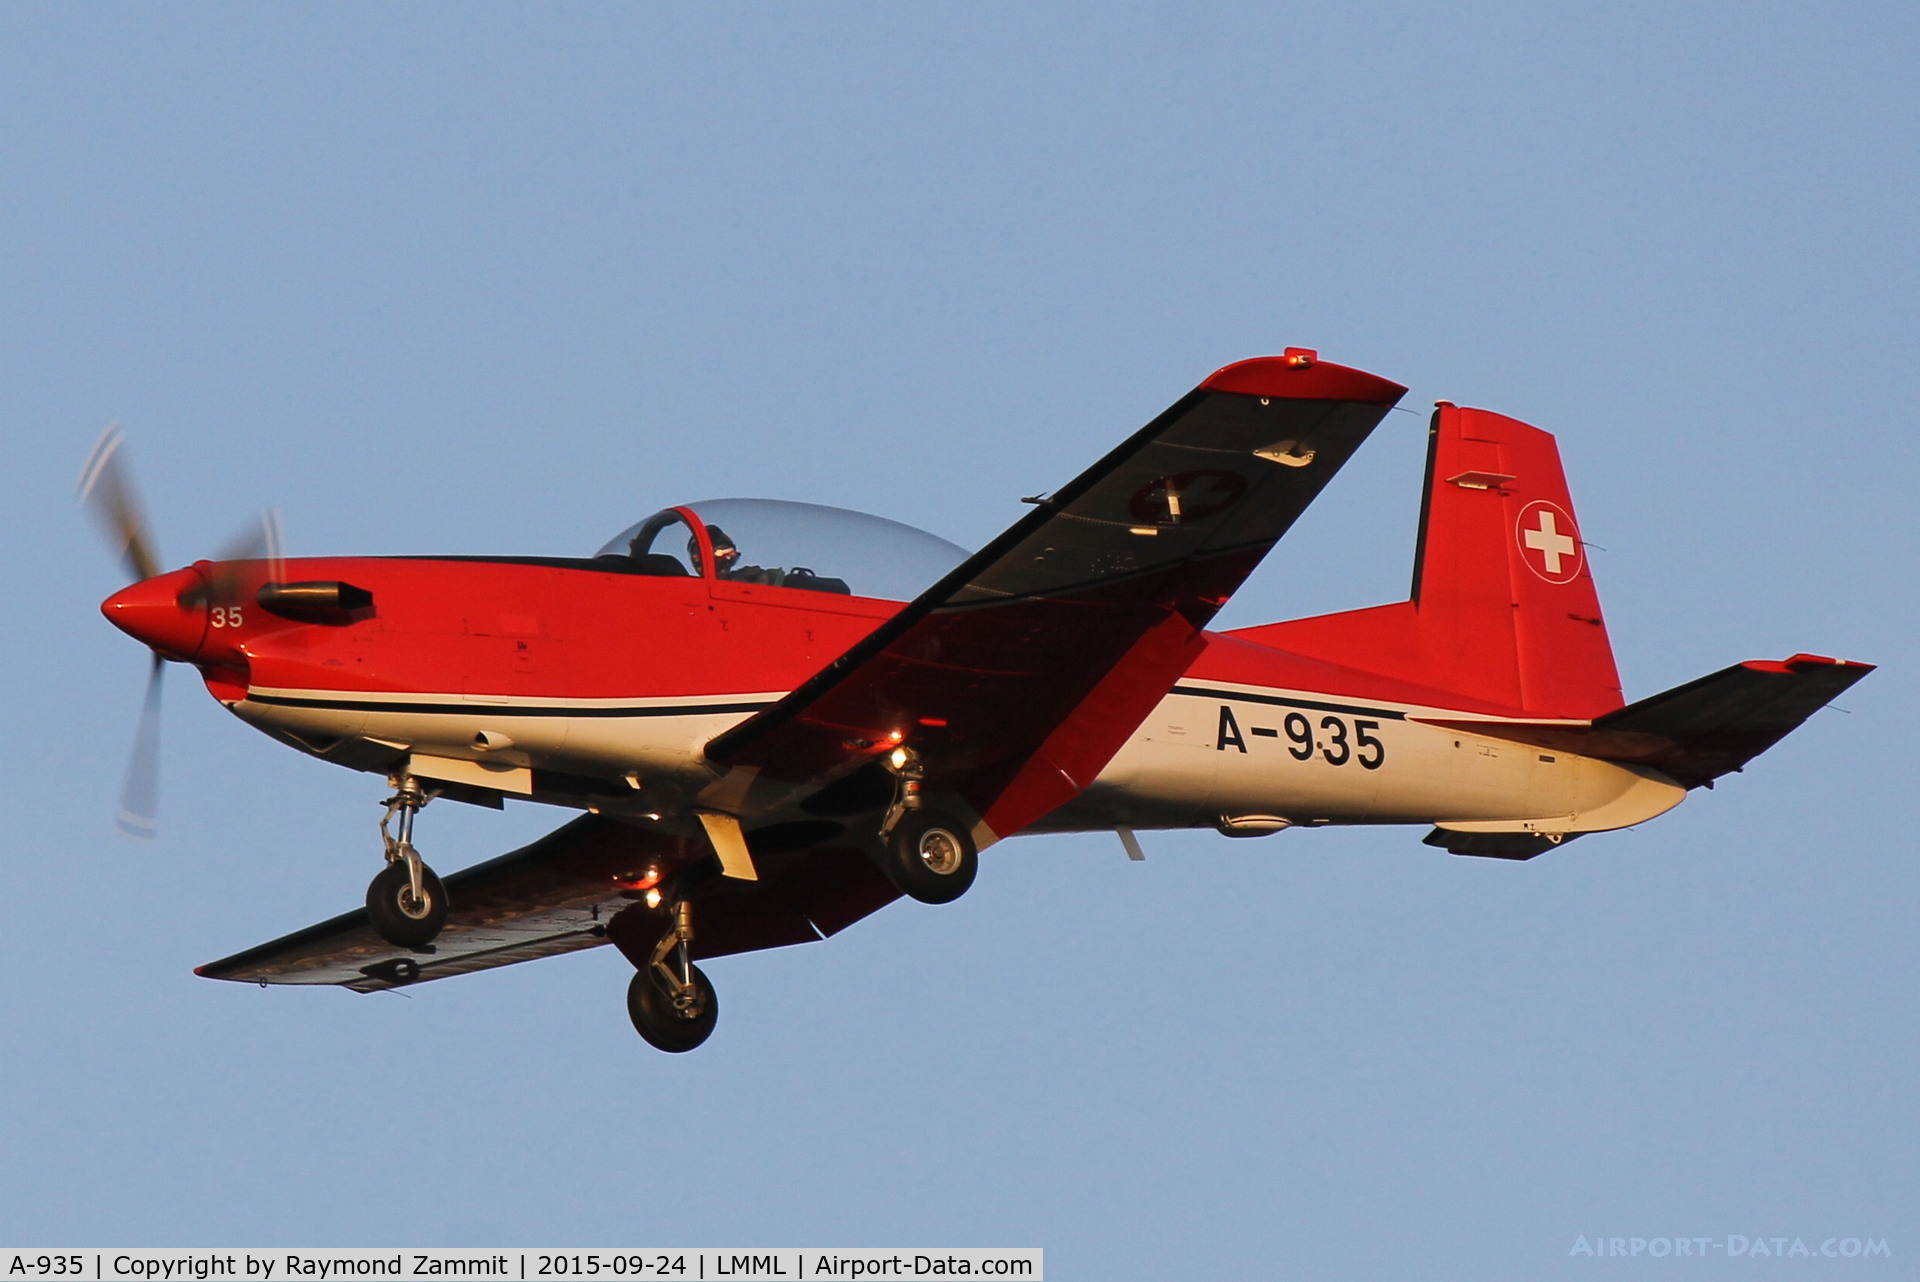 A-935, 1983 Pilatus PC-7 Turbo Trainer C/N 343, Pilatus PC-7 A-935 Swiss Air Force